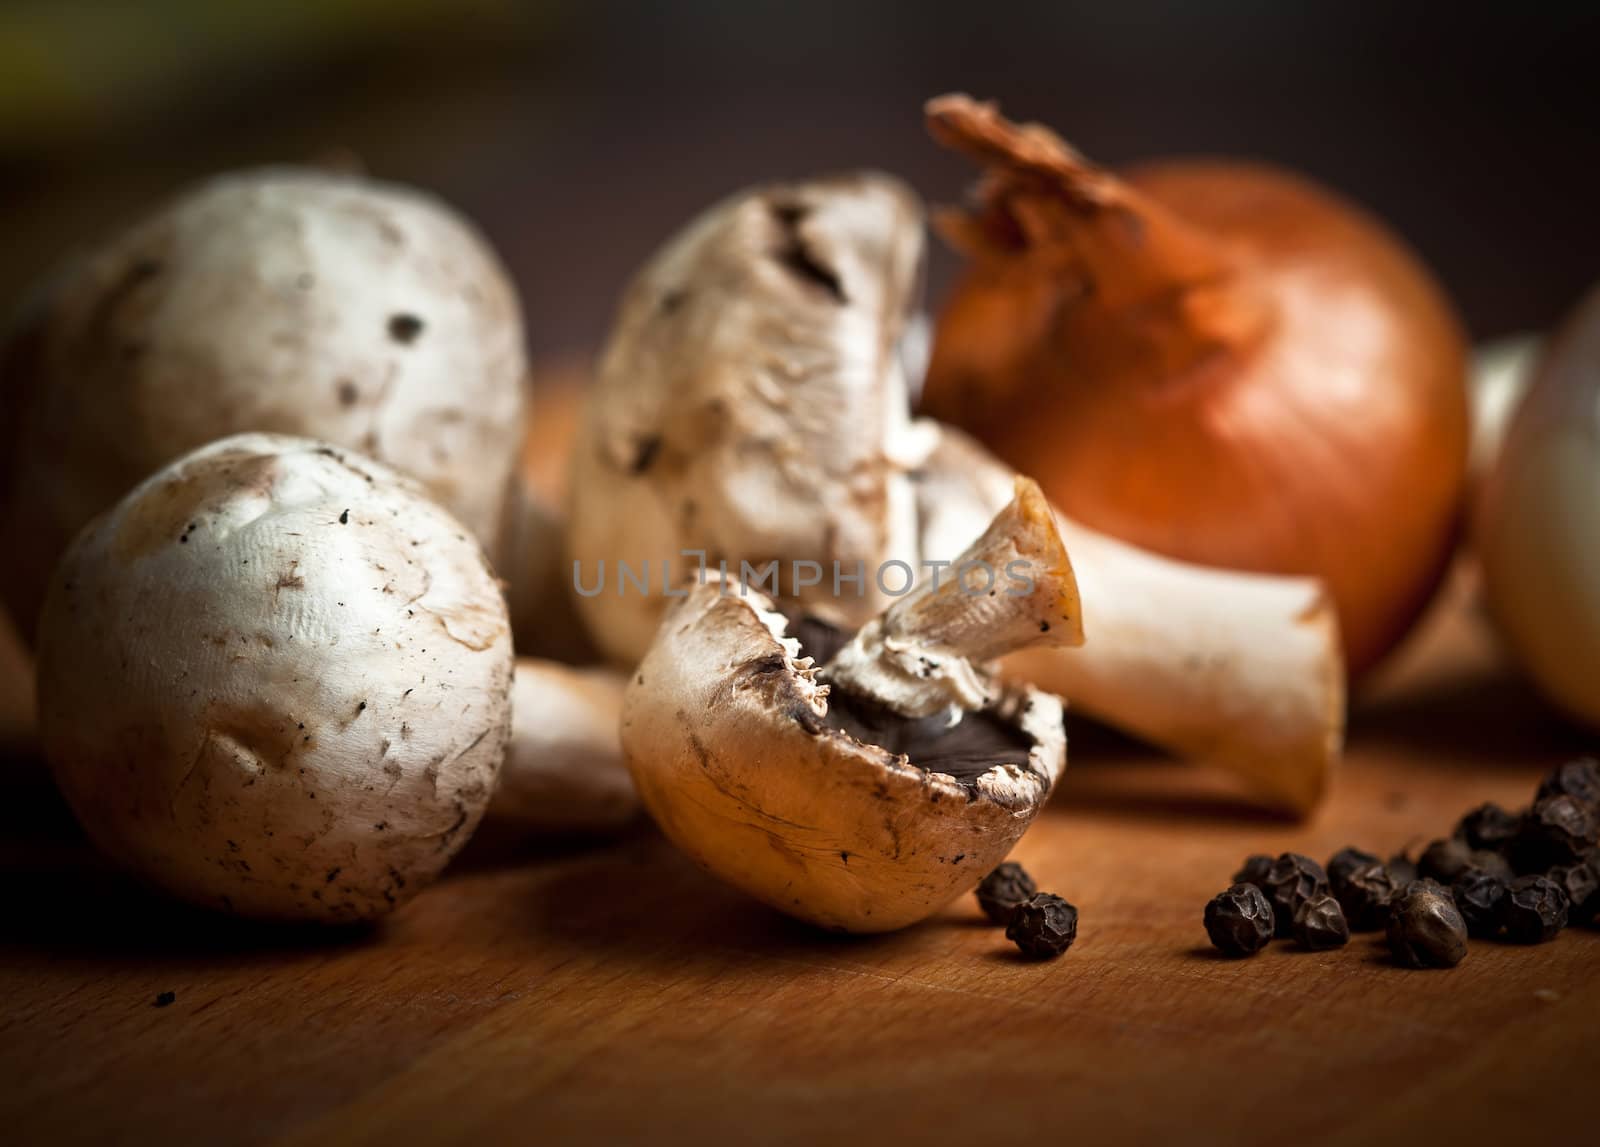 Still life with mushrooms by palinchak